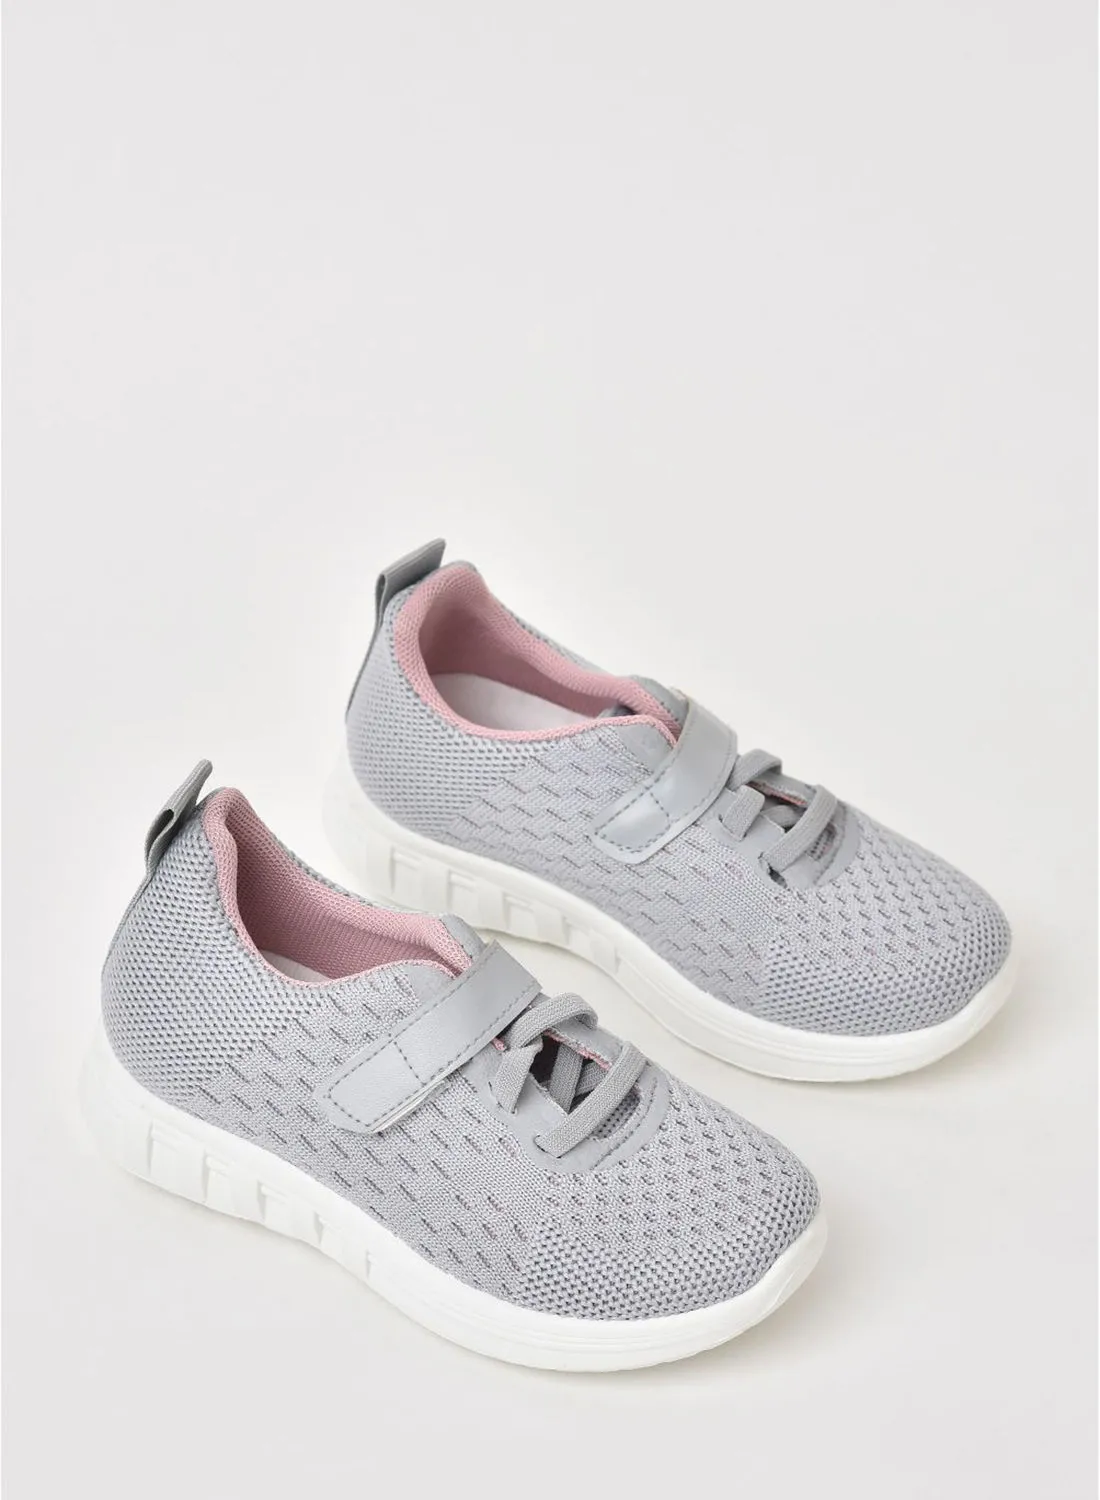 QUWA Casual Sneaker Grey/Pink